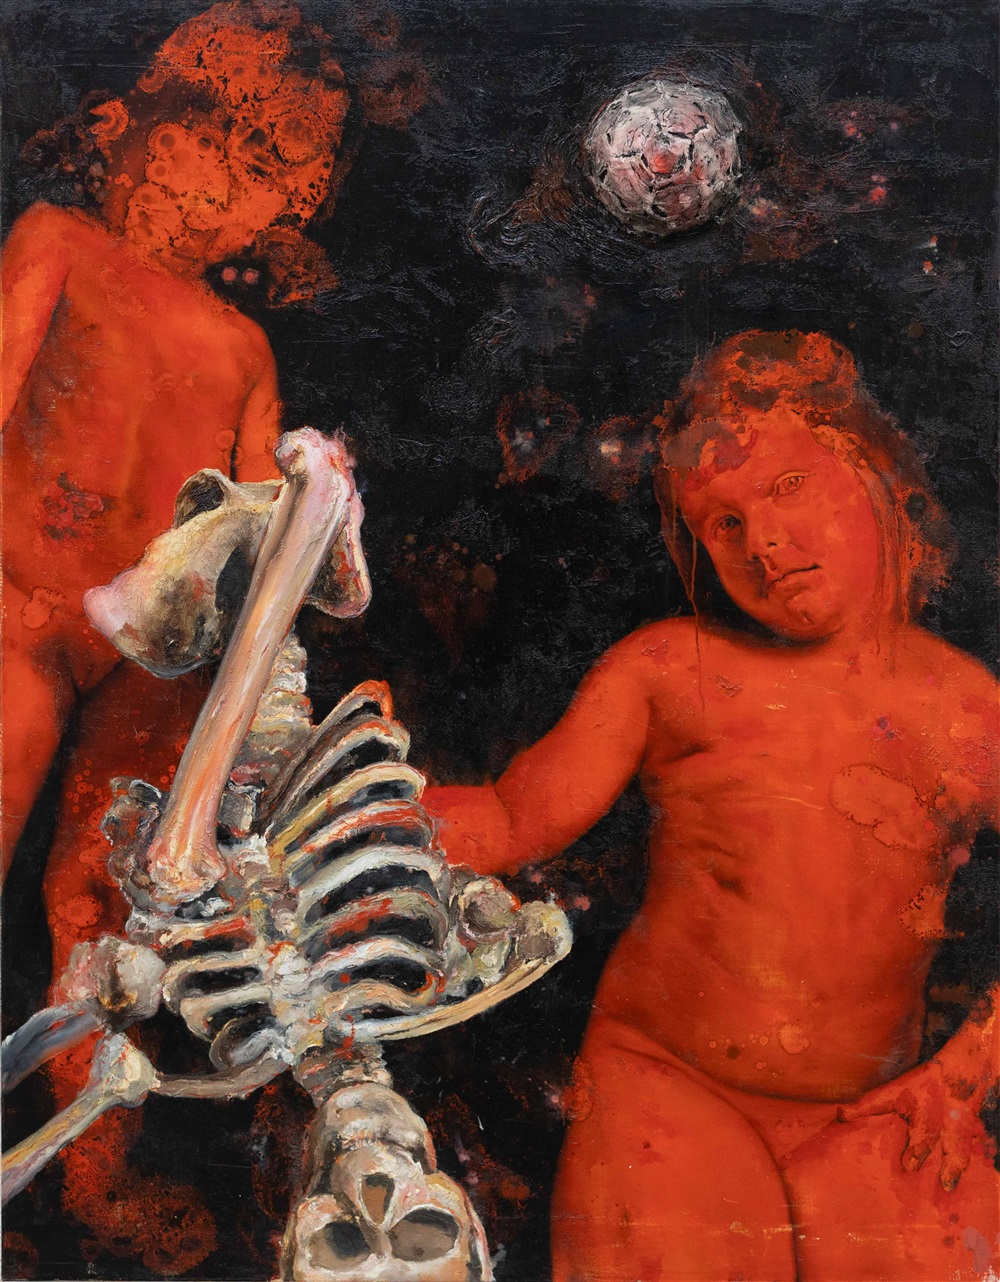 tra demonio e santità, 2005 by federico guida